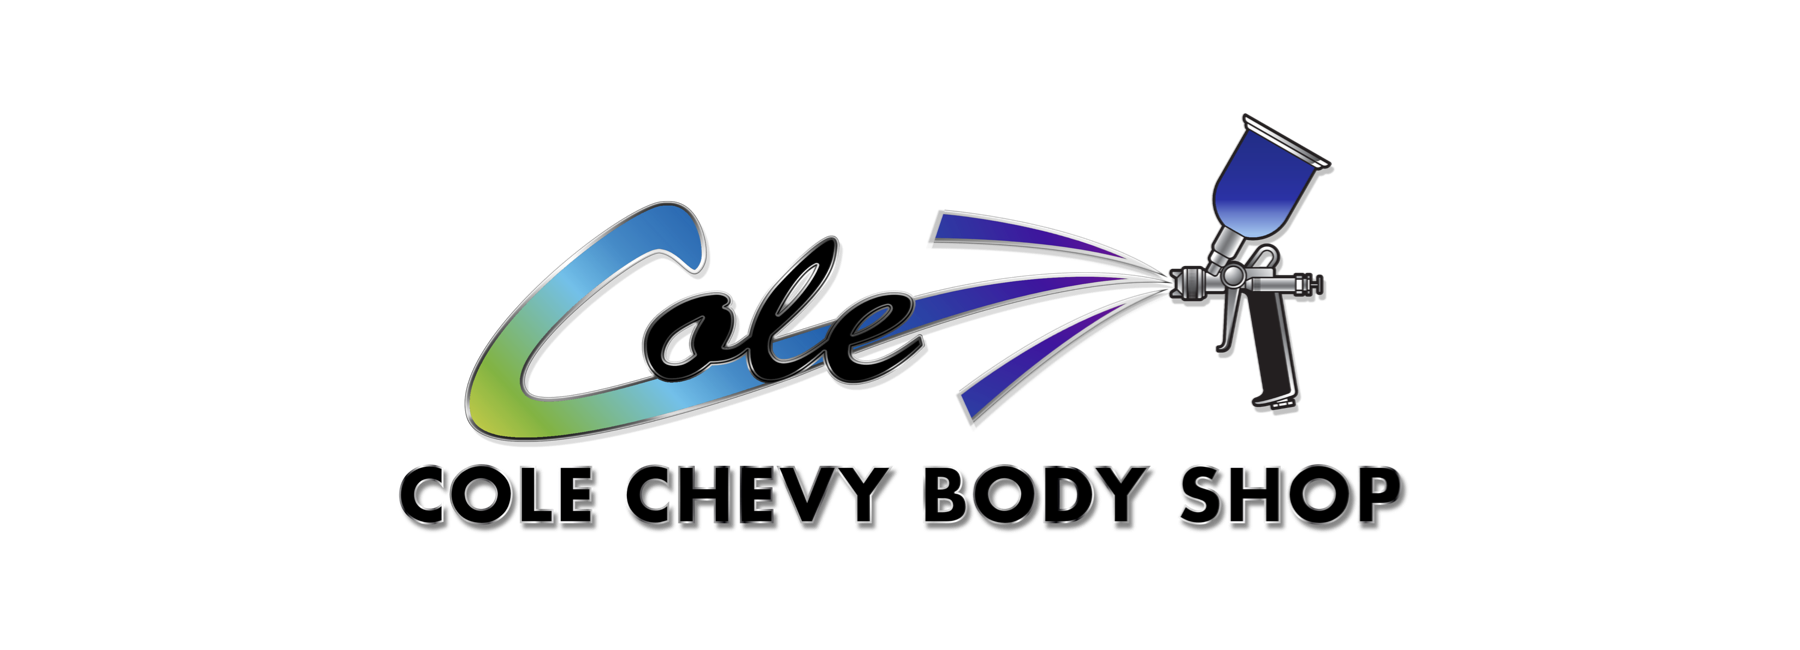 Cole Body Shop banner